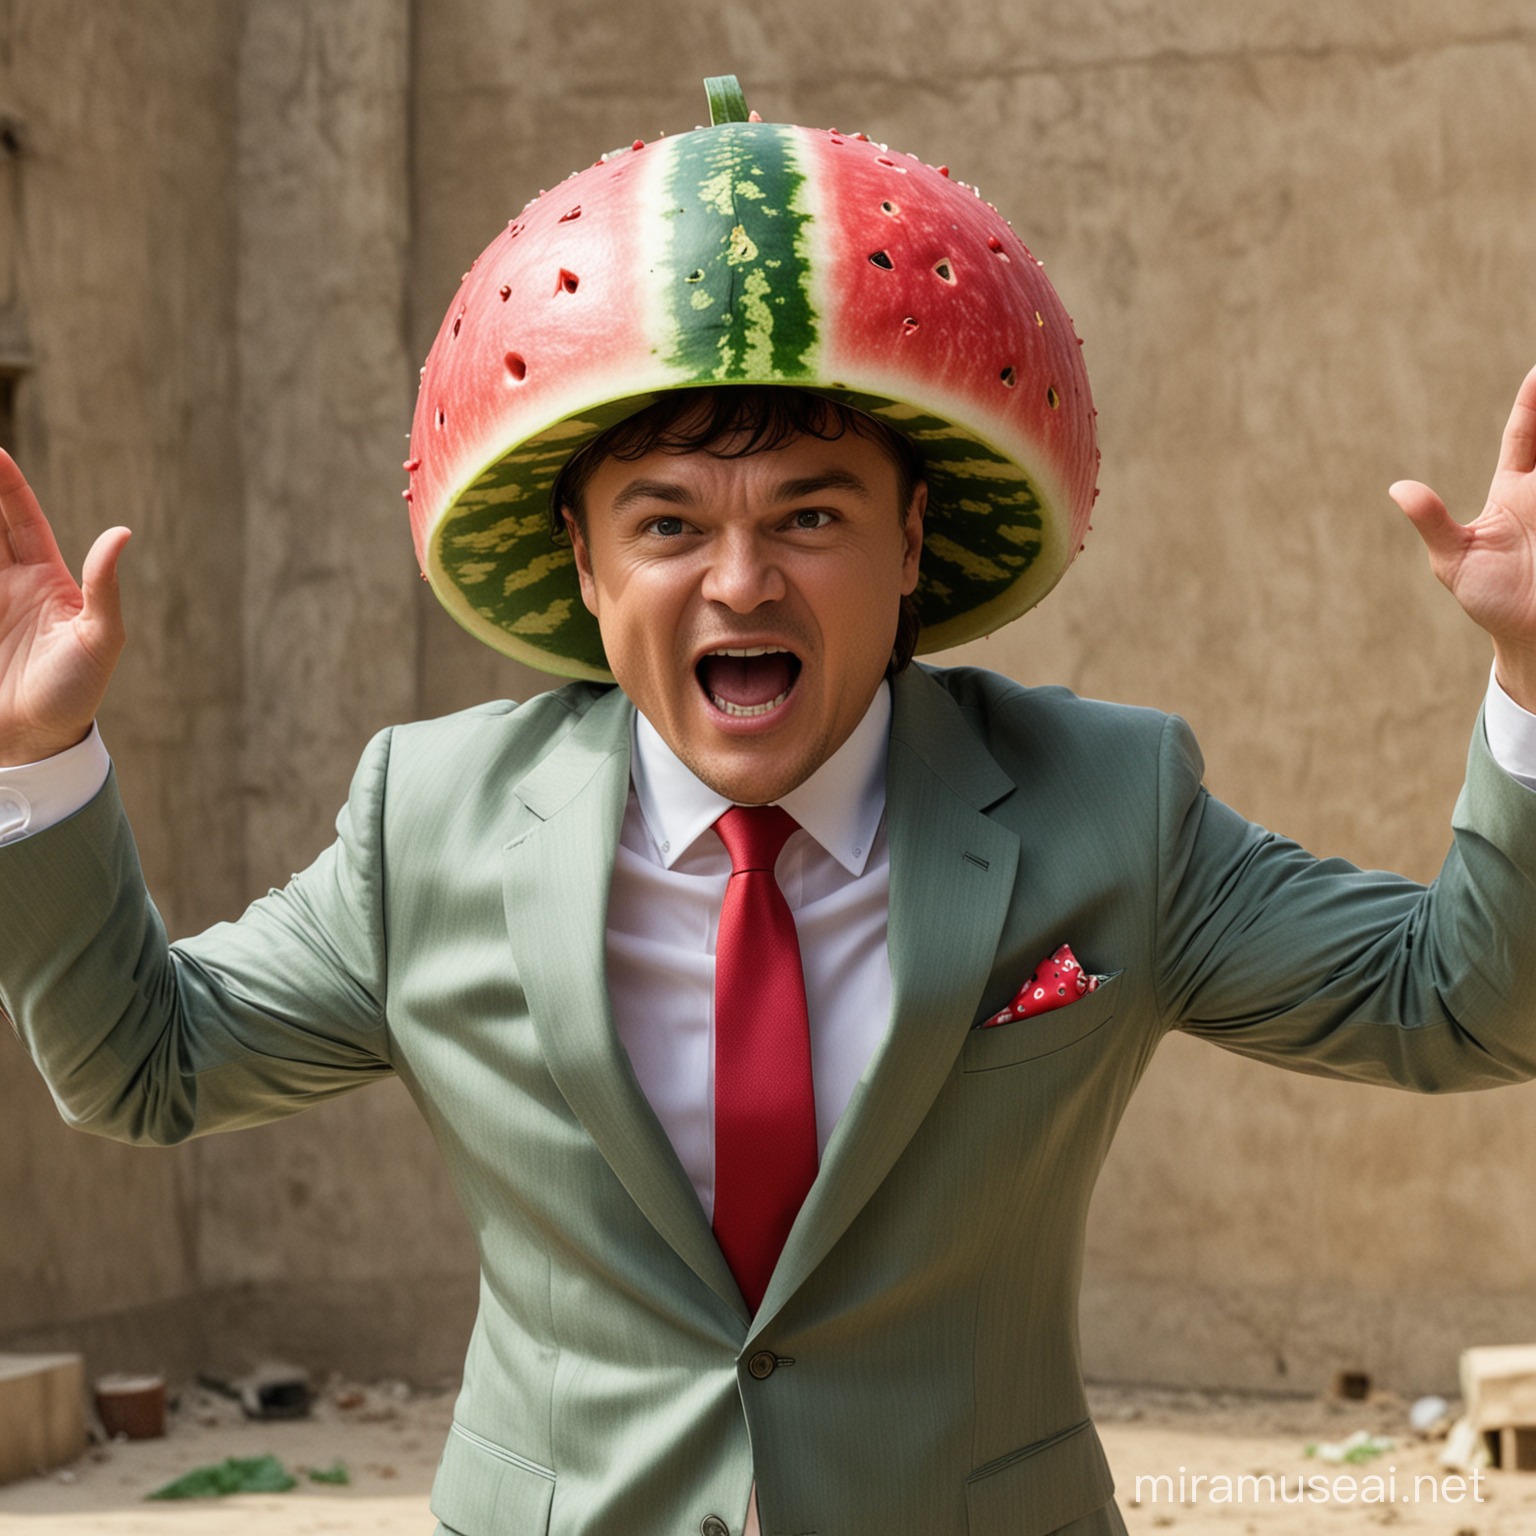 Leonardo DiCaprio Wearing Watermelon Helmet in OpenArmed Suit Pose